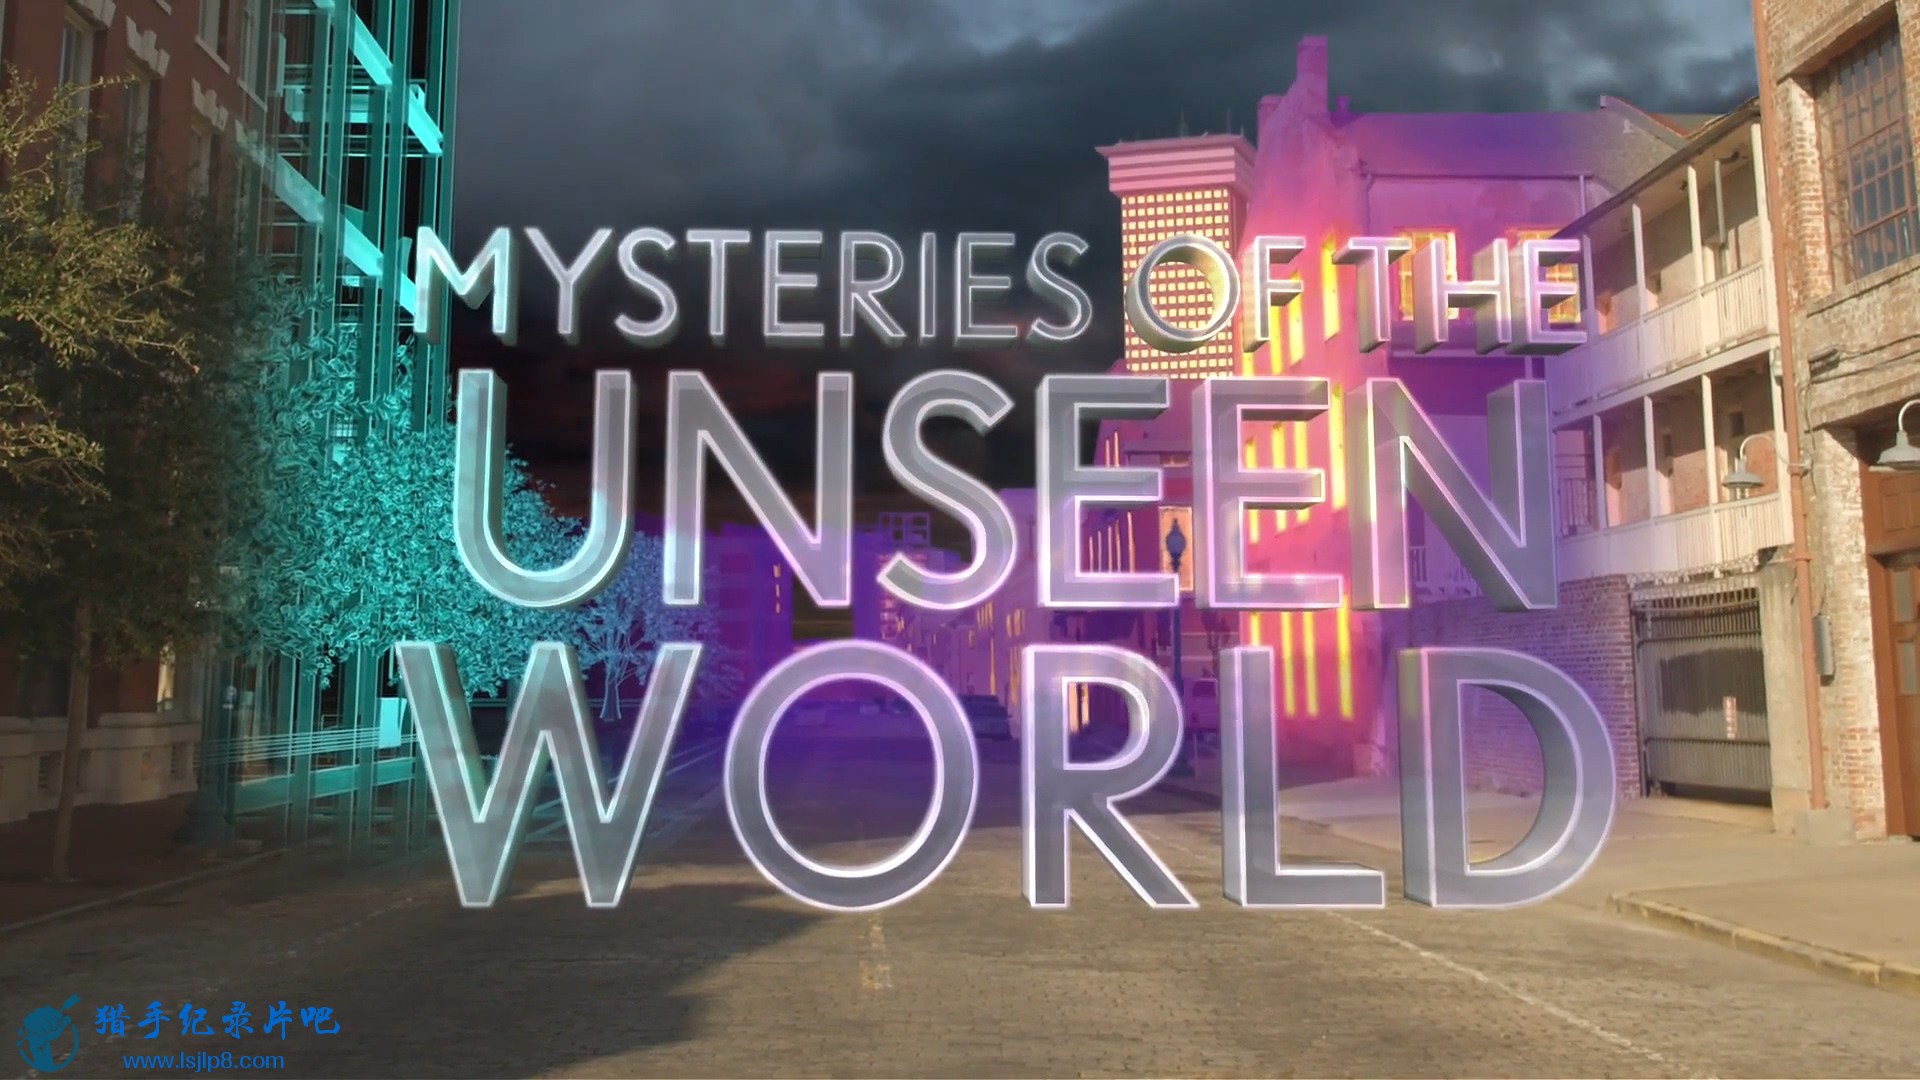 Mysteries.of.the.Unseen.World.2013.1080p.BluRay.x264.AAC.MVGroup.org.mkv_2019092.jpg